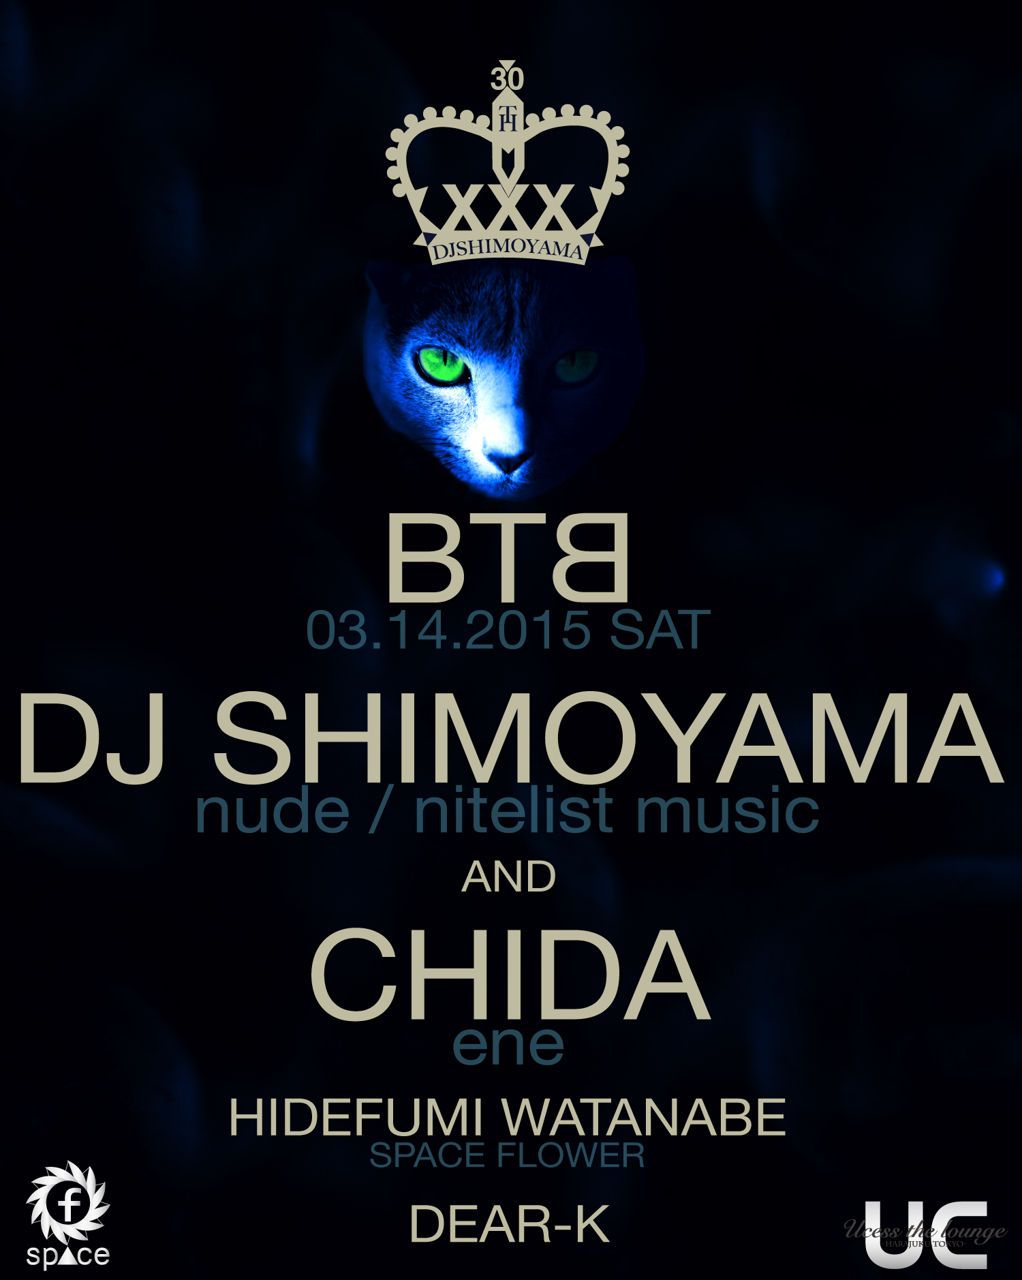 BTB (BACK TO BASIC) dj shimoyama anniversary year